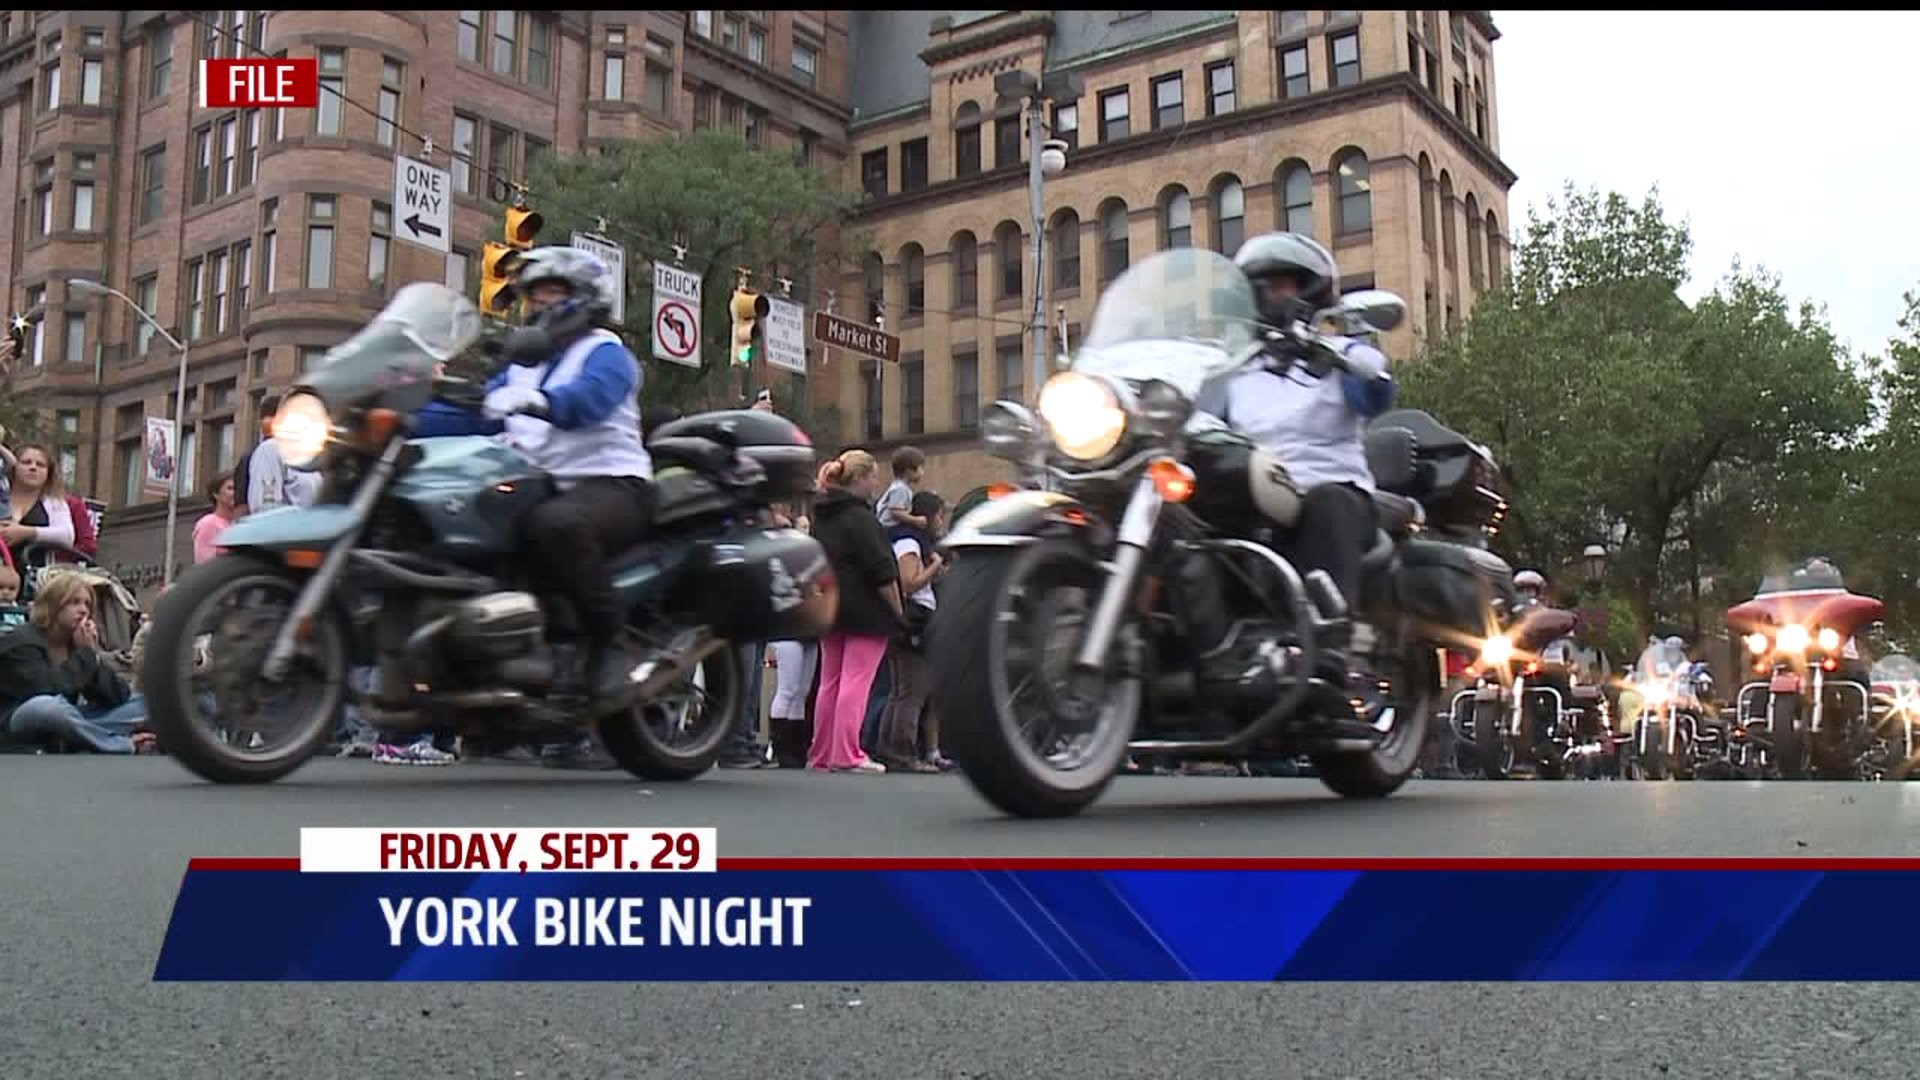 Harley-Davidson Motor Co. and York present the 23rd annual York Bike Night